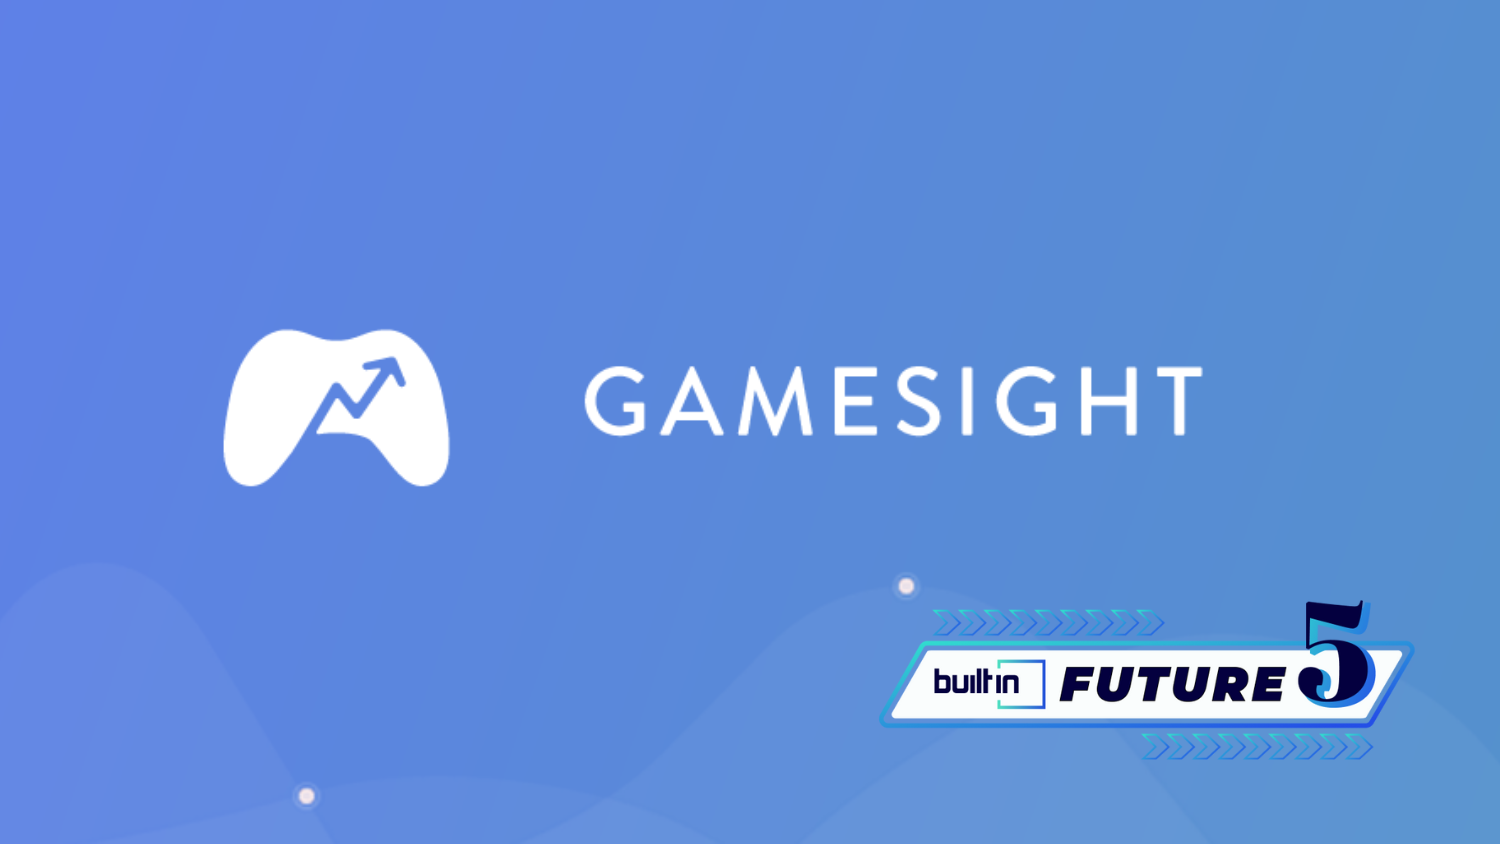 Gamesight future 5 seattle q3 2022